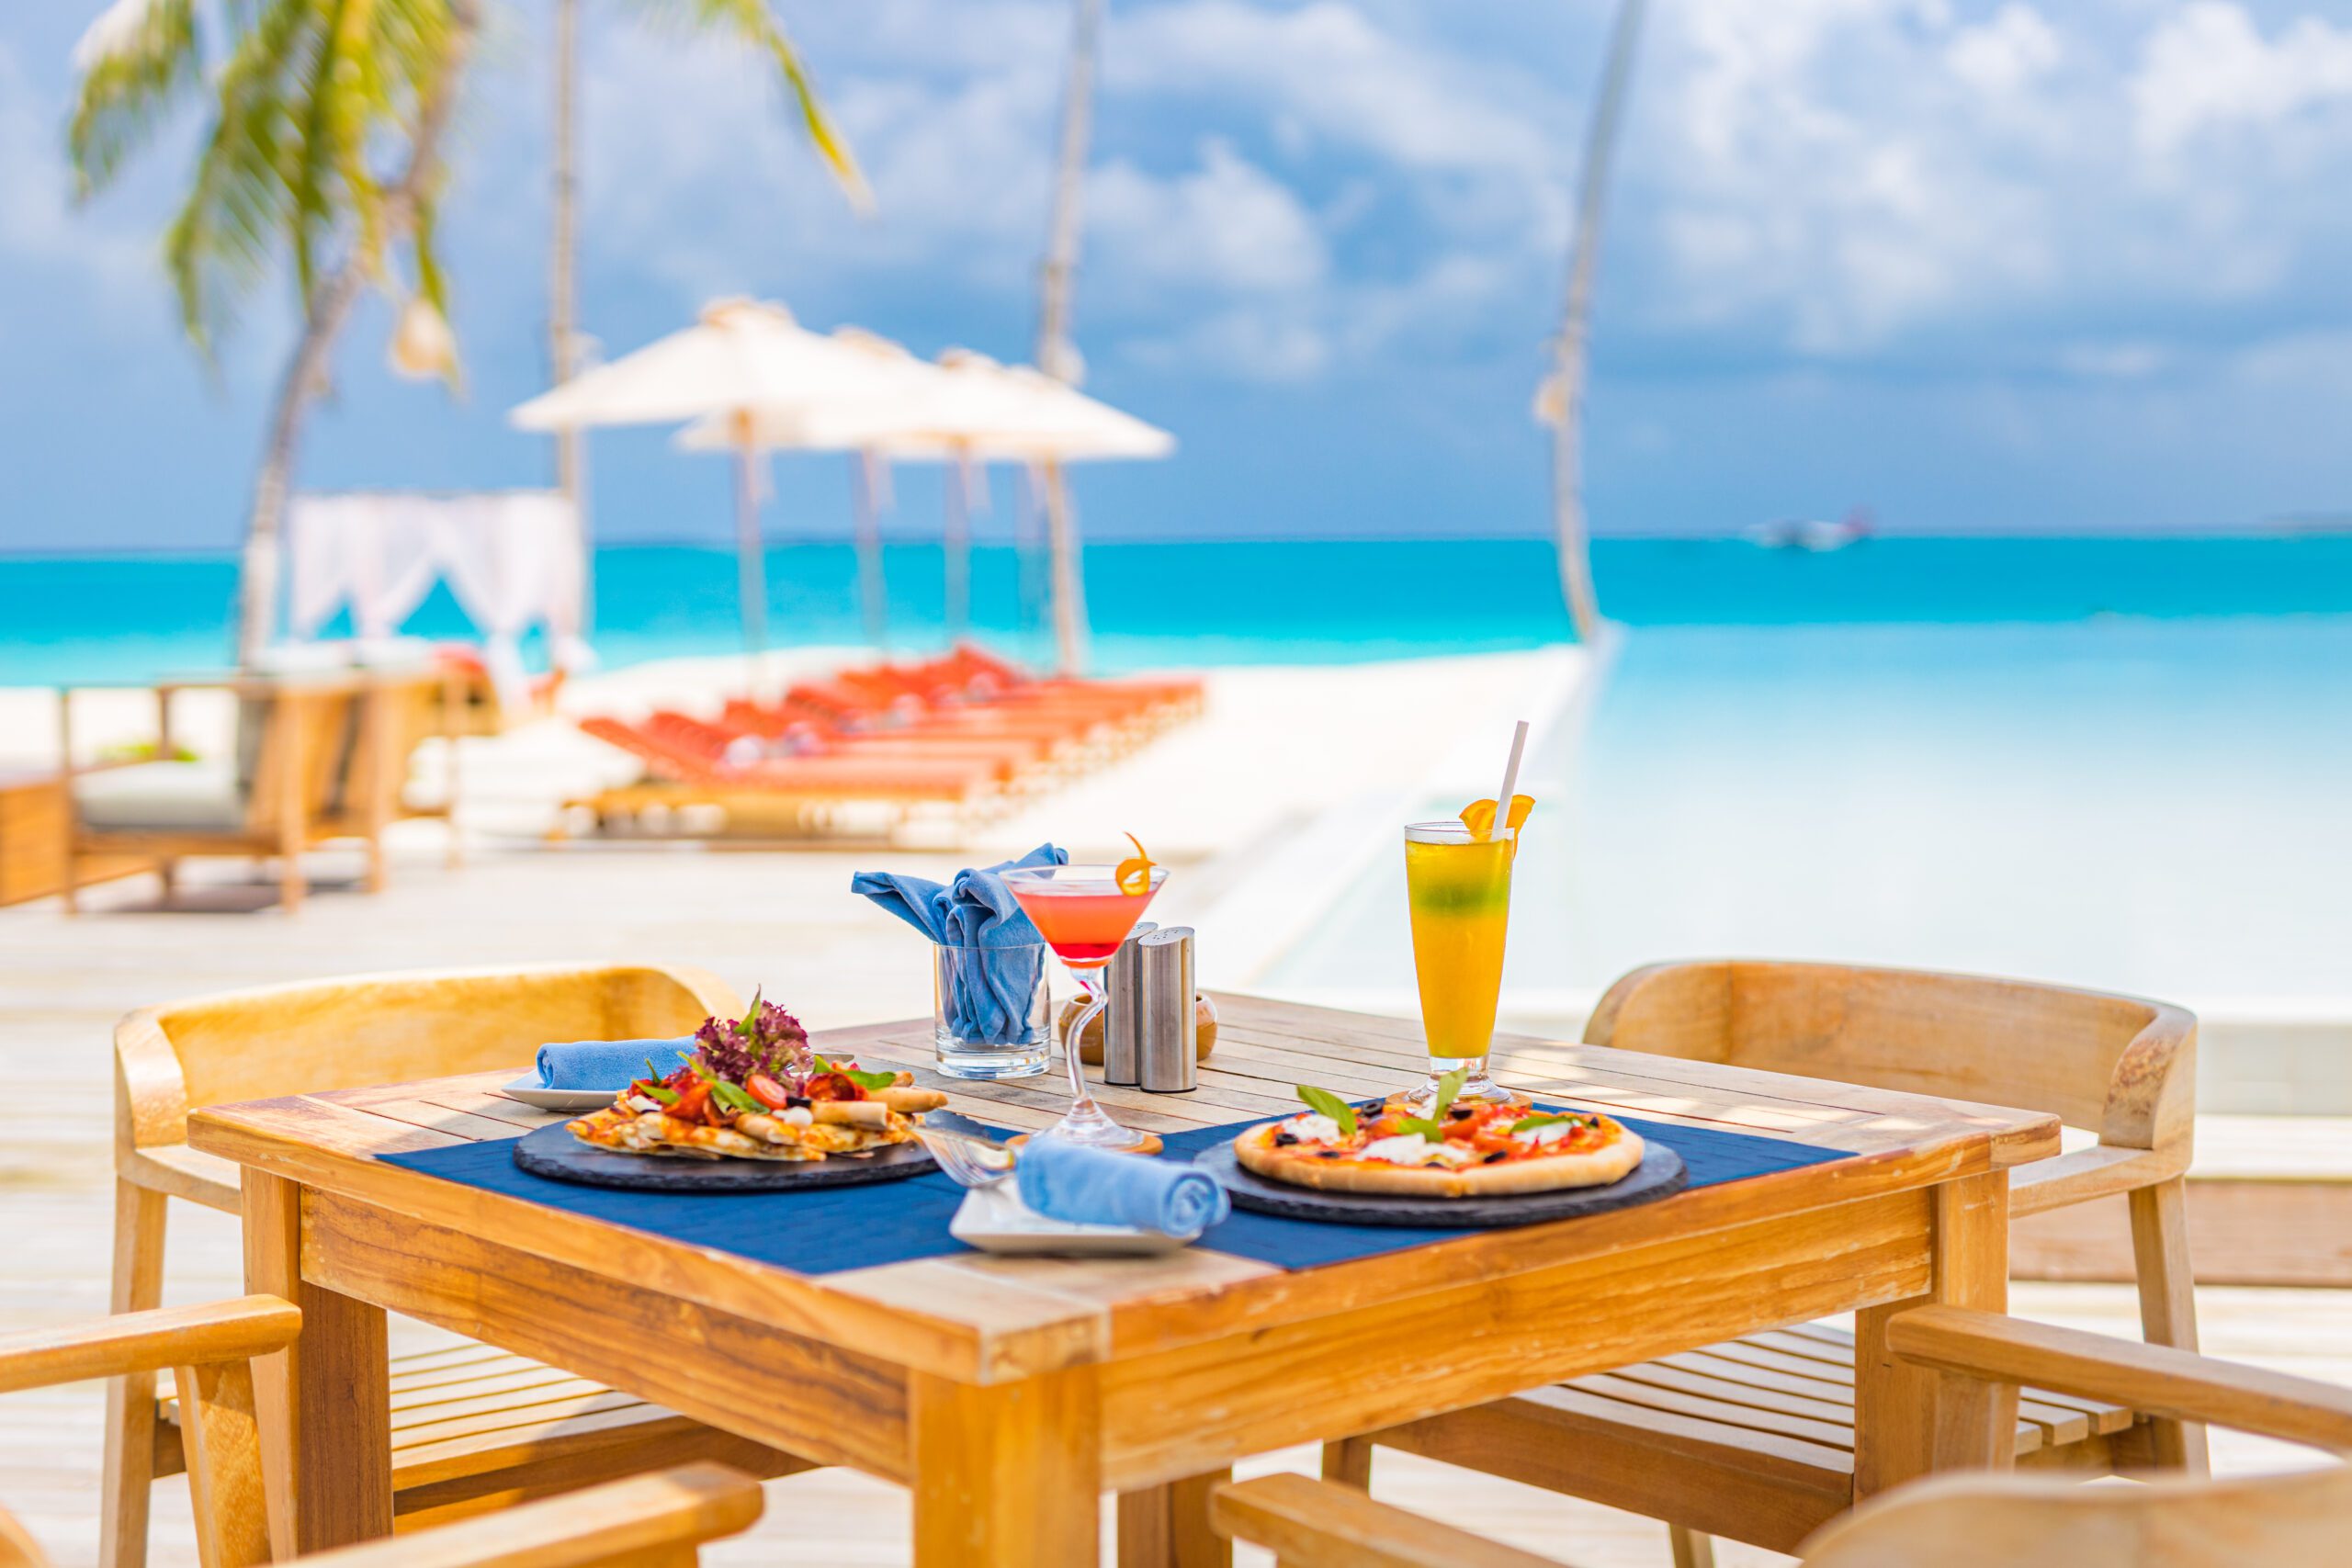 luxury-resort-relax-poolside-outdoor-beach-restaurant-tropical-island-cafe-bar-drinks-food